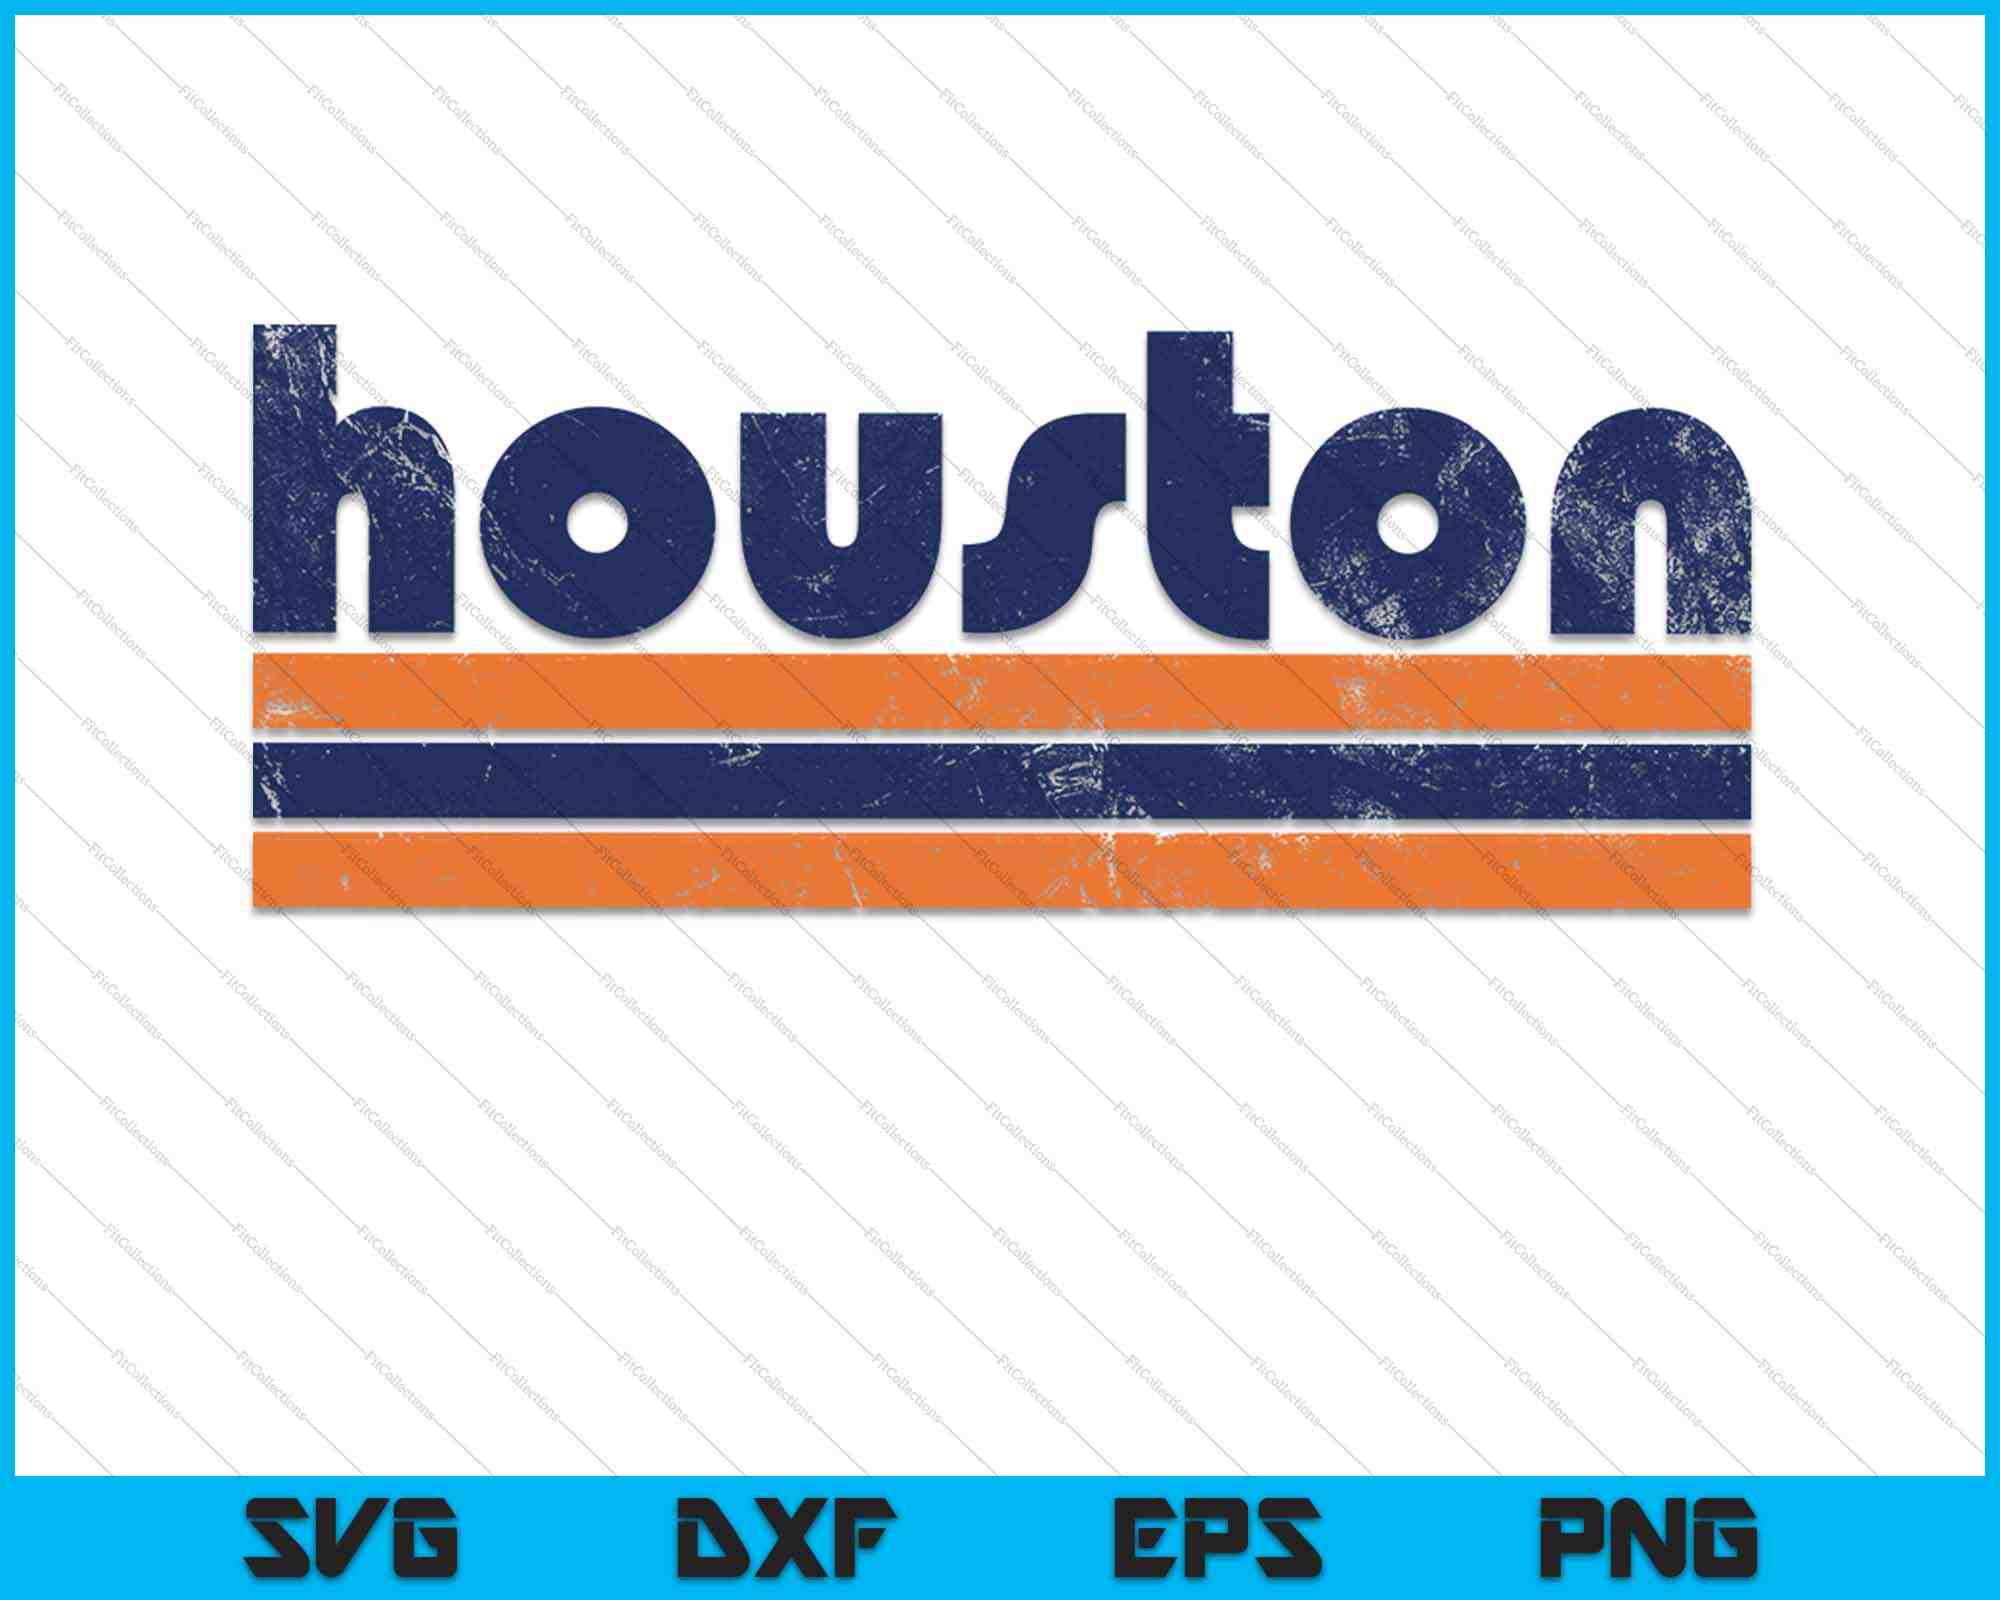 Astros Baseball SVG, Vintage Houston Astros SVG